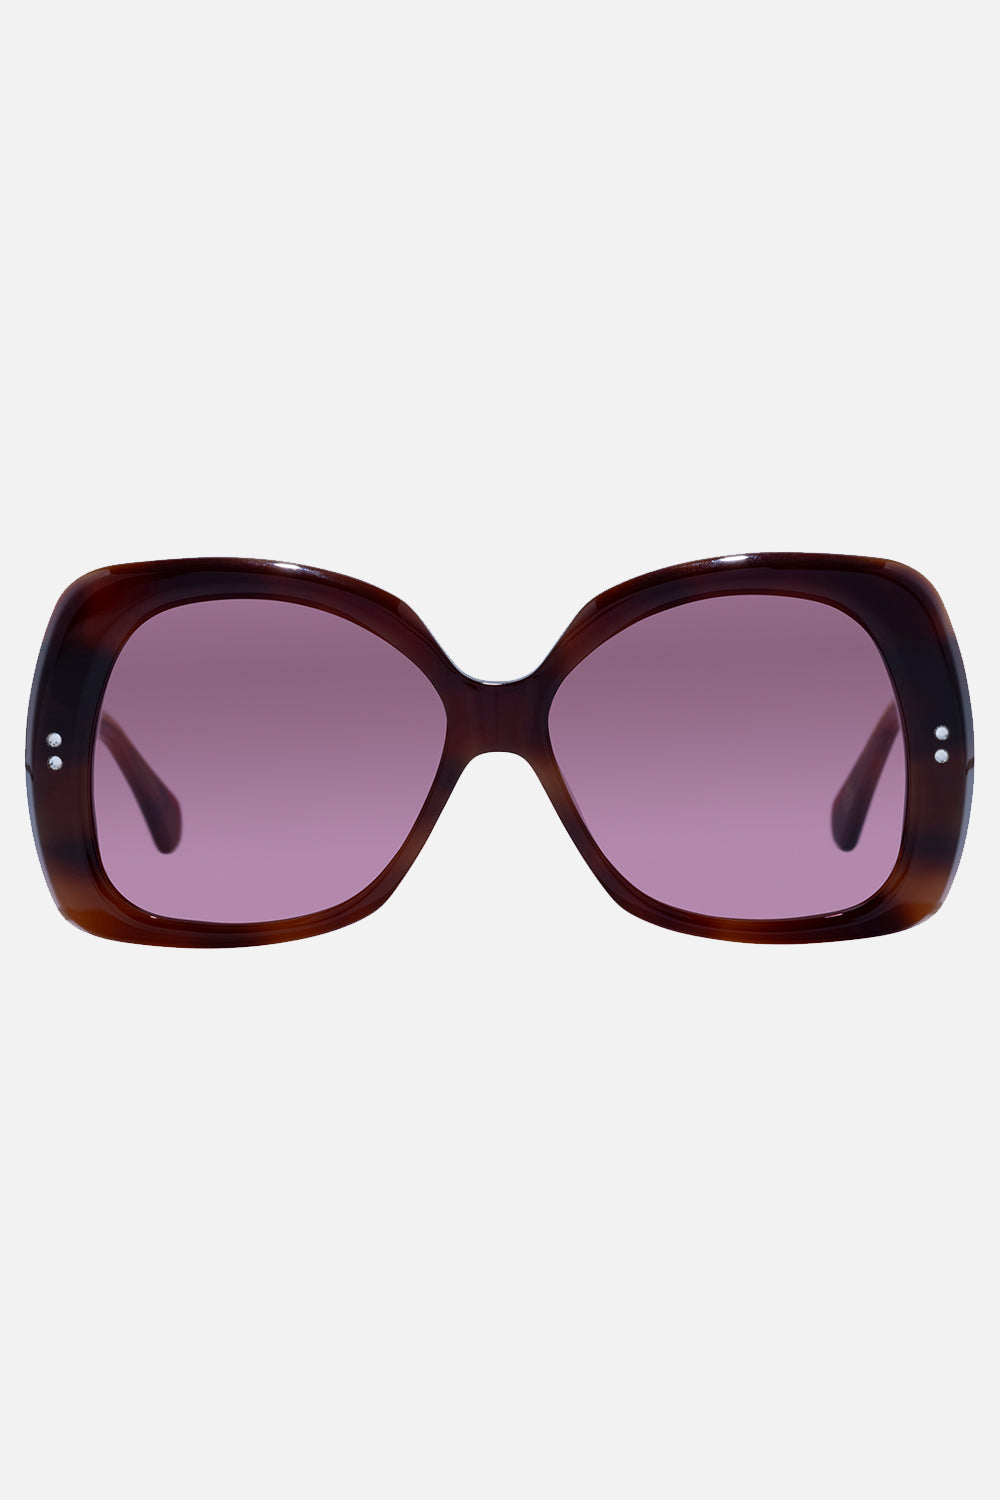 CAMILLA designer sunglasses in Late Checkout ivory 